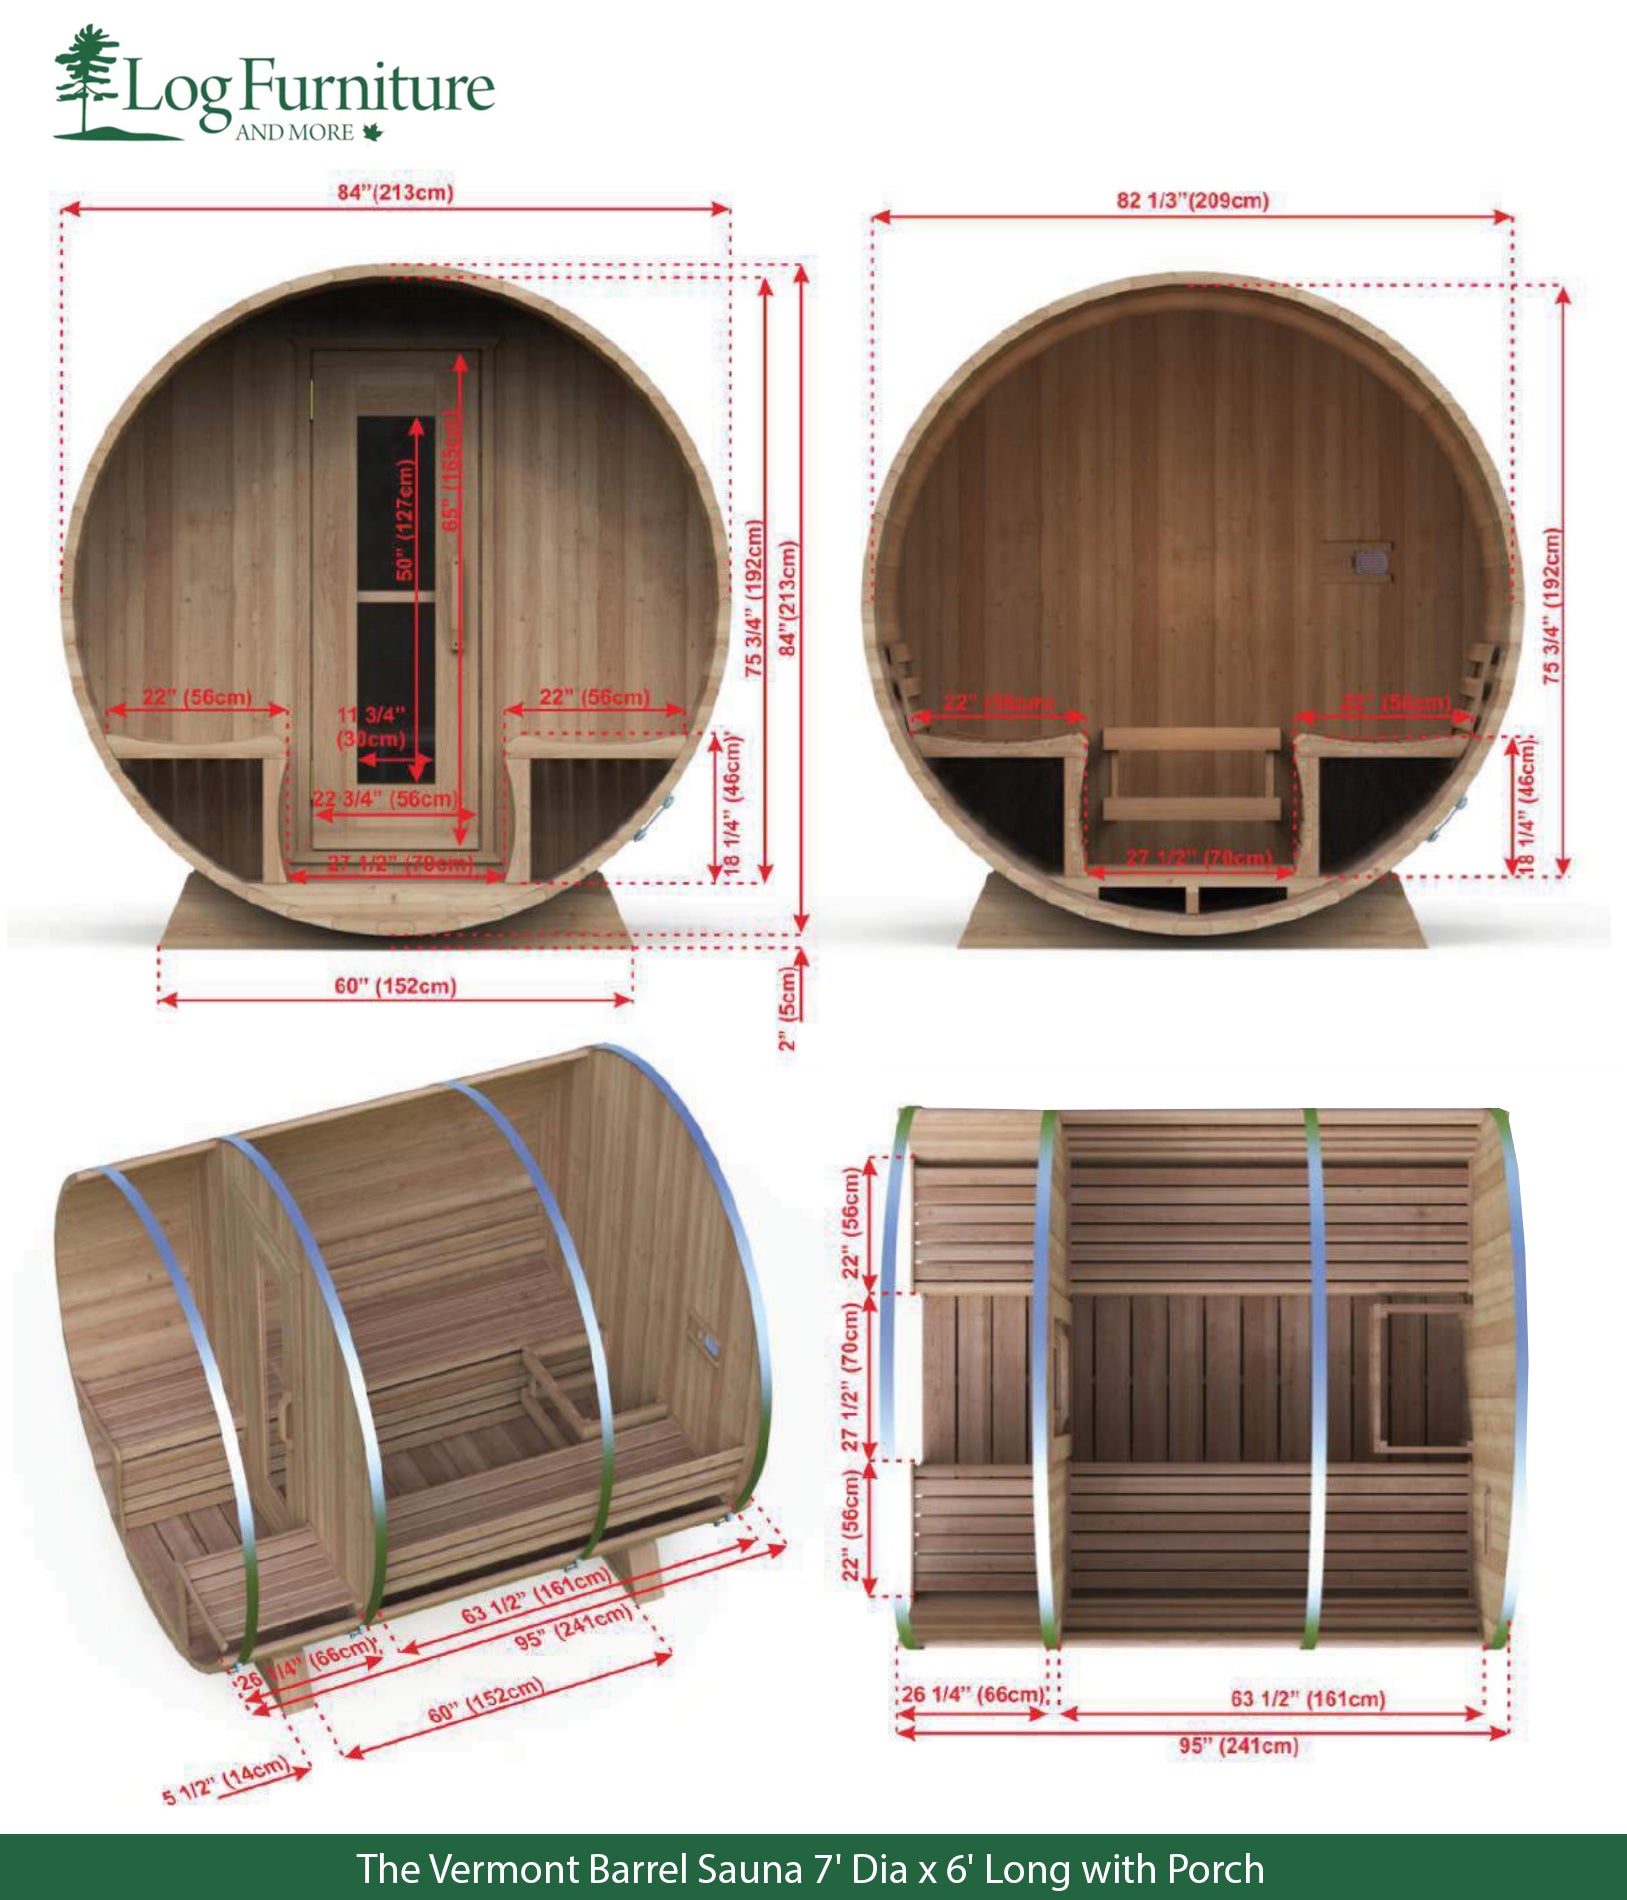 The Vermont Barrel Sauna 7' Dia x 6' Long with Porch